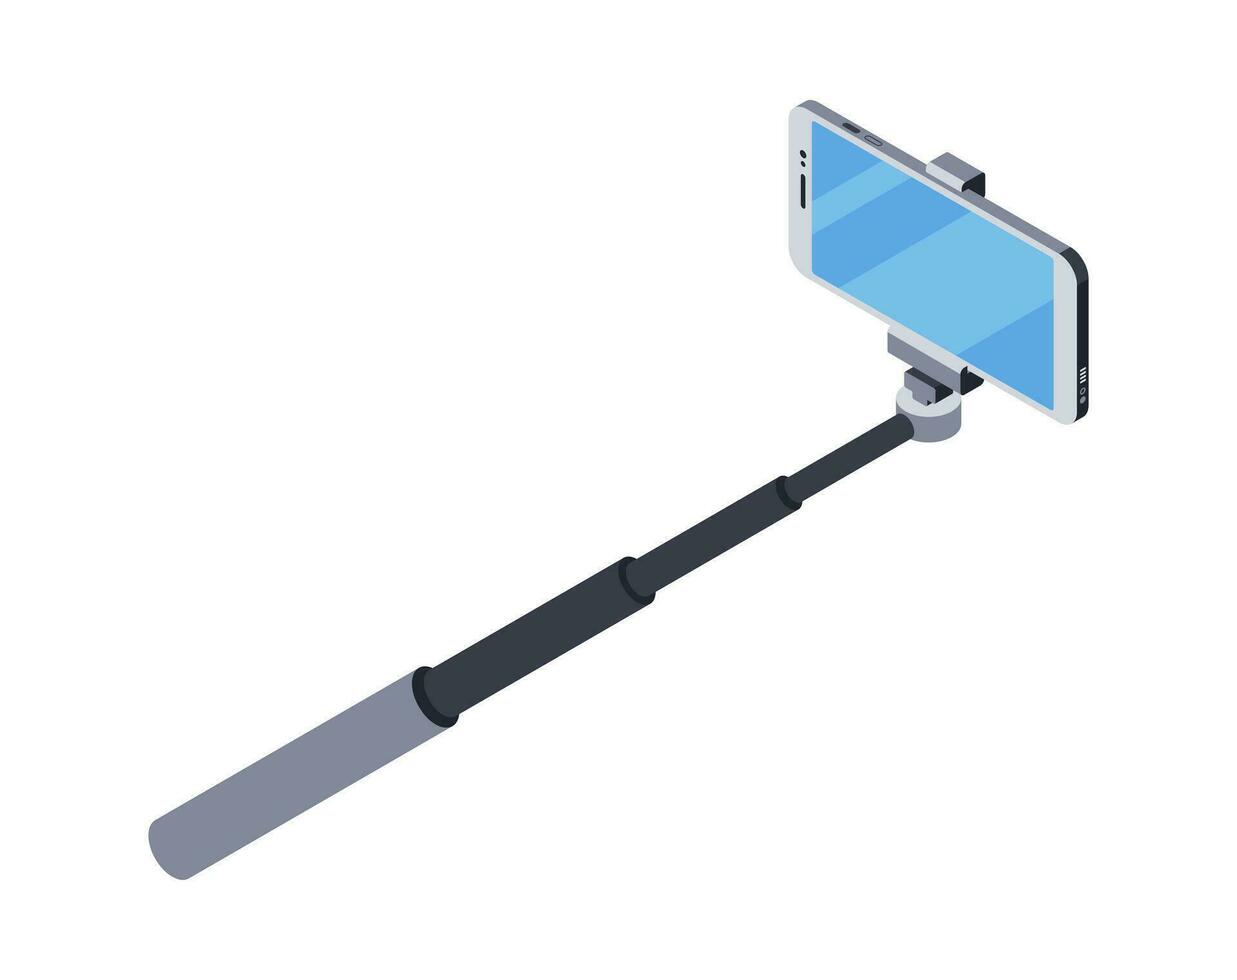 3d icon selfie stick monopod, self portrait tool. Gadget for smartphone photography. Monopod selfie shots device. Digital technology, electronic equipment. Vector isometric illustration